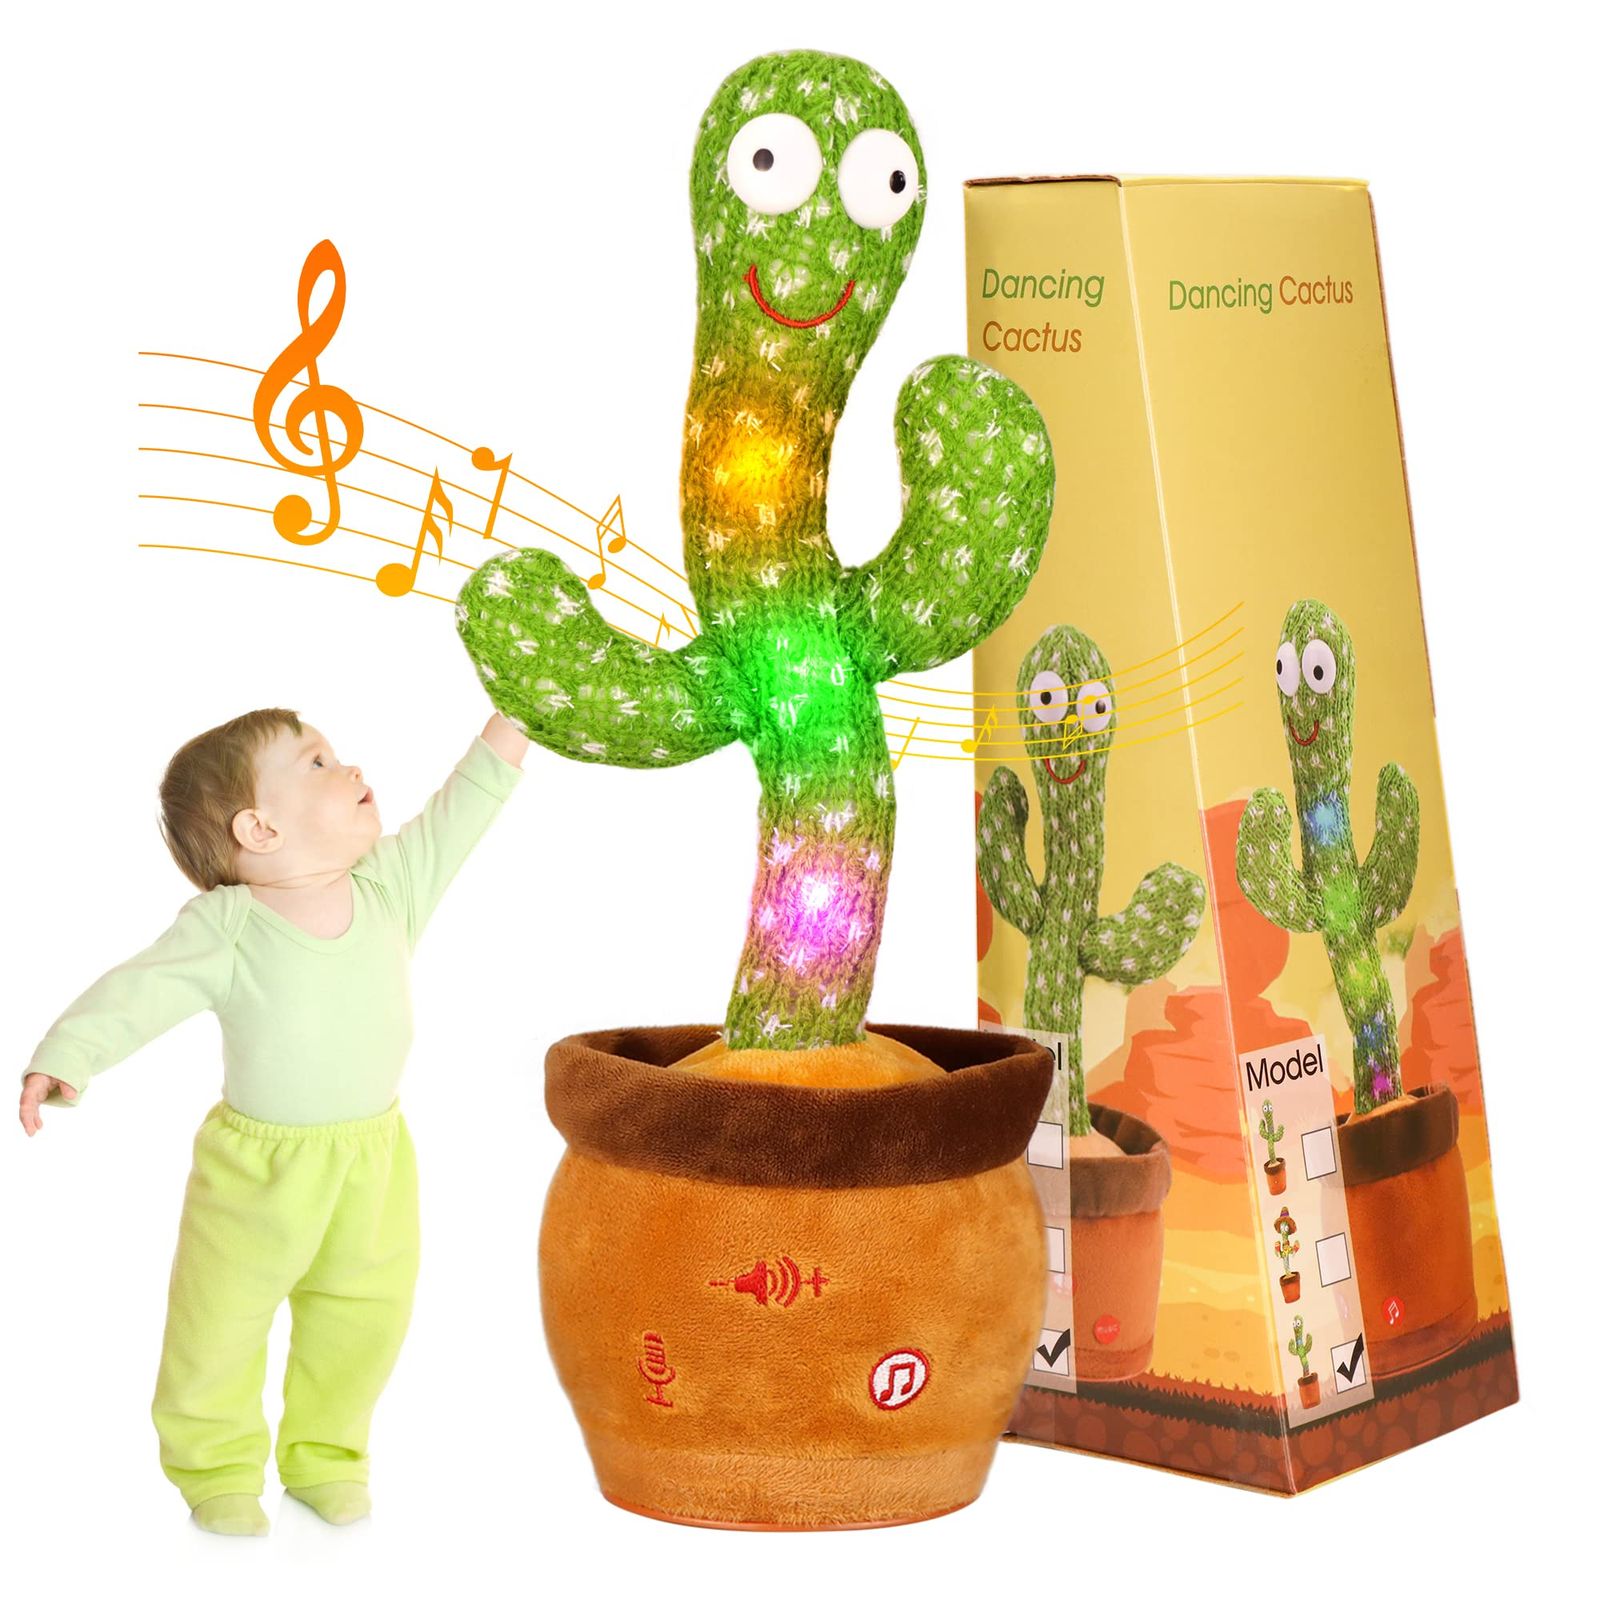 MIAODAM サボテン おもちゃ 動くサボテン 踊るサボテン ダンシングサボテン dancing cactus toy 音量調節 刺繍ボタン 箱詰め 子供の日 誕生日 クリスマス プレゼント 歌う 声を真似するぬいぐるみ おうむ返し ぬいぐるみ 録音 飾り